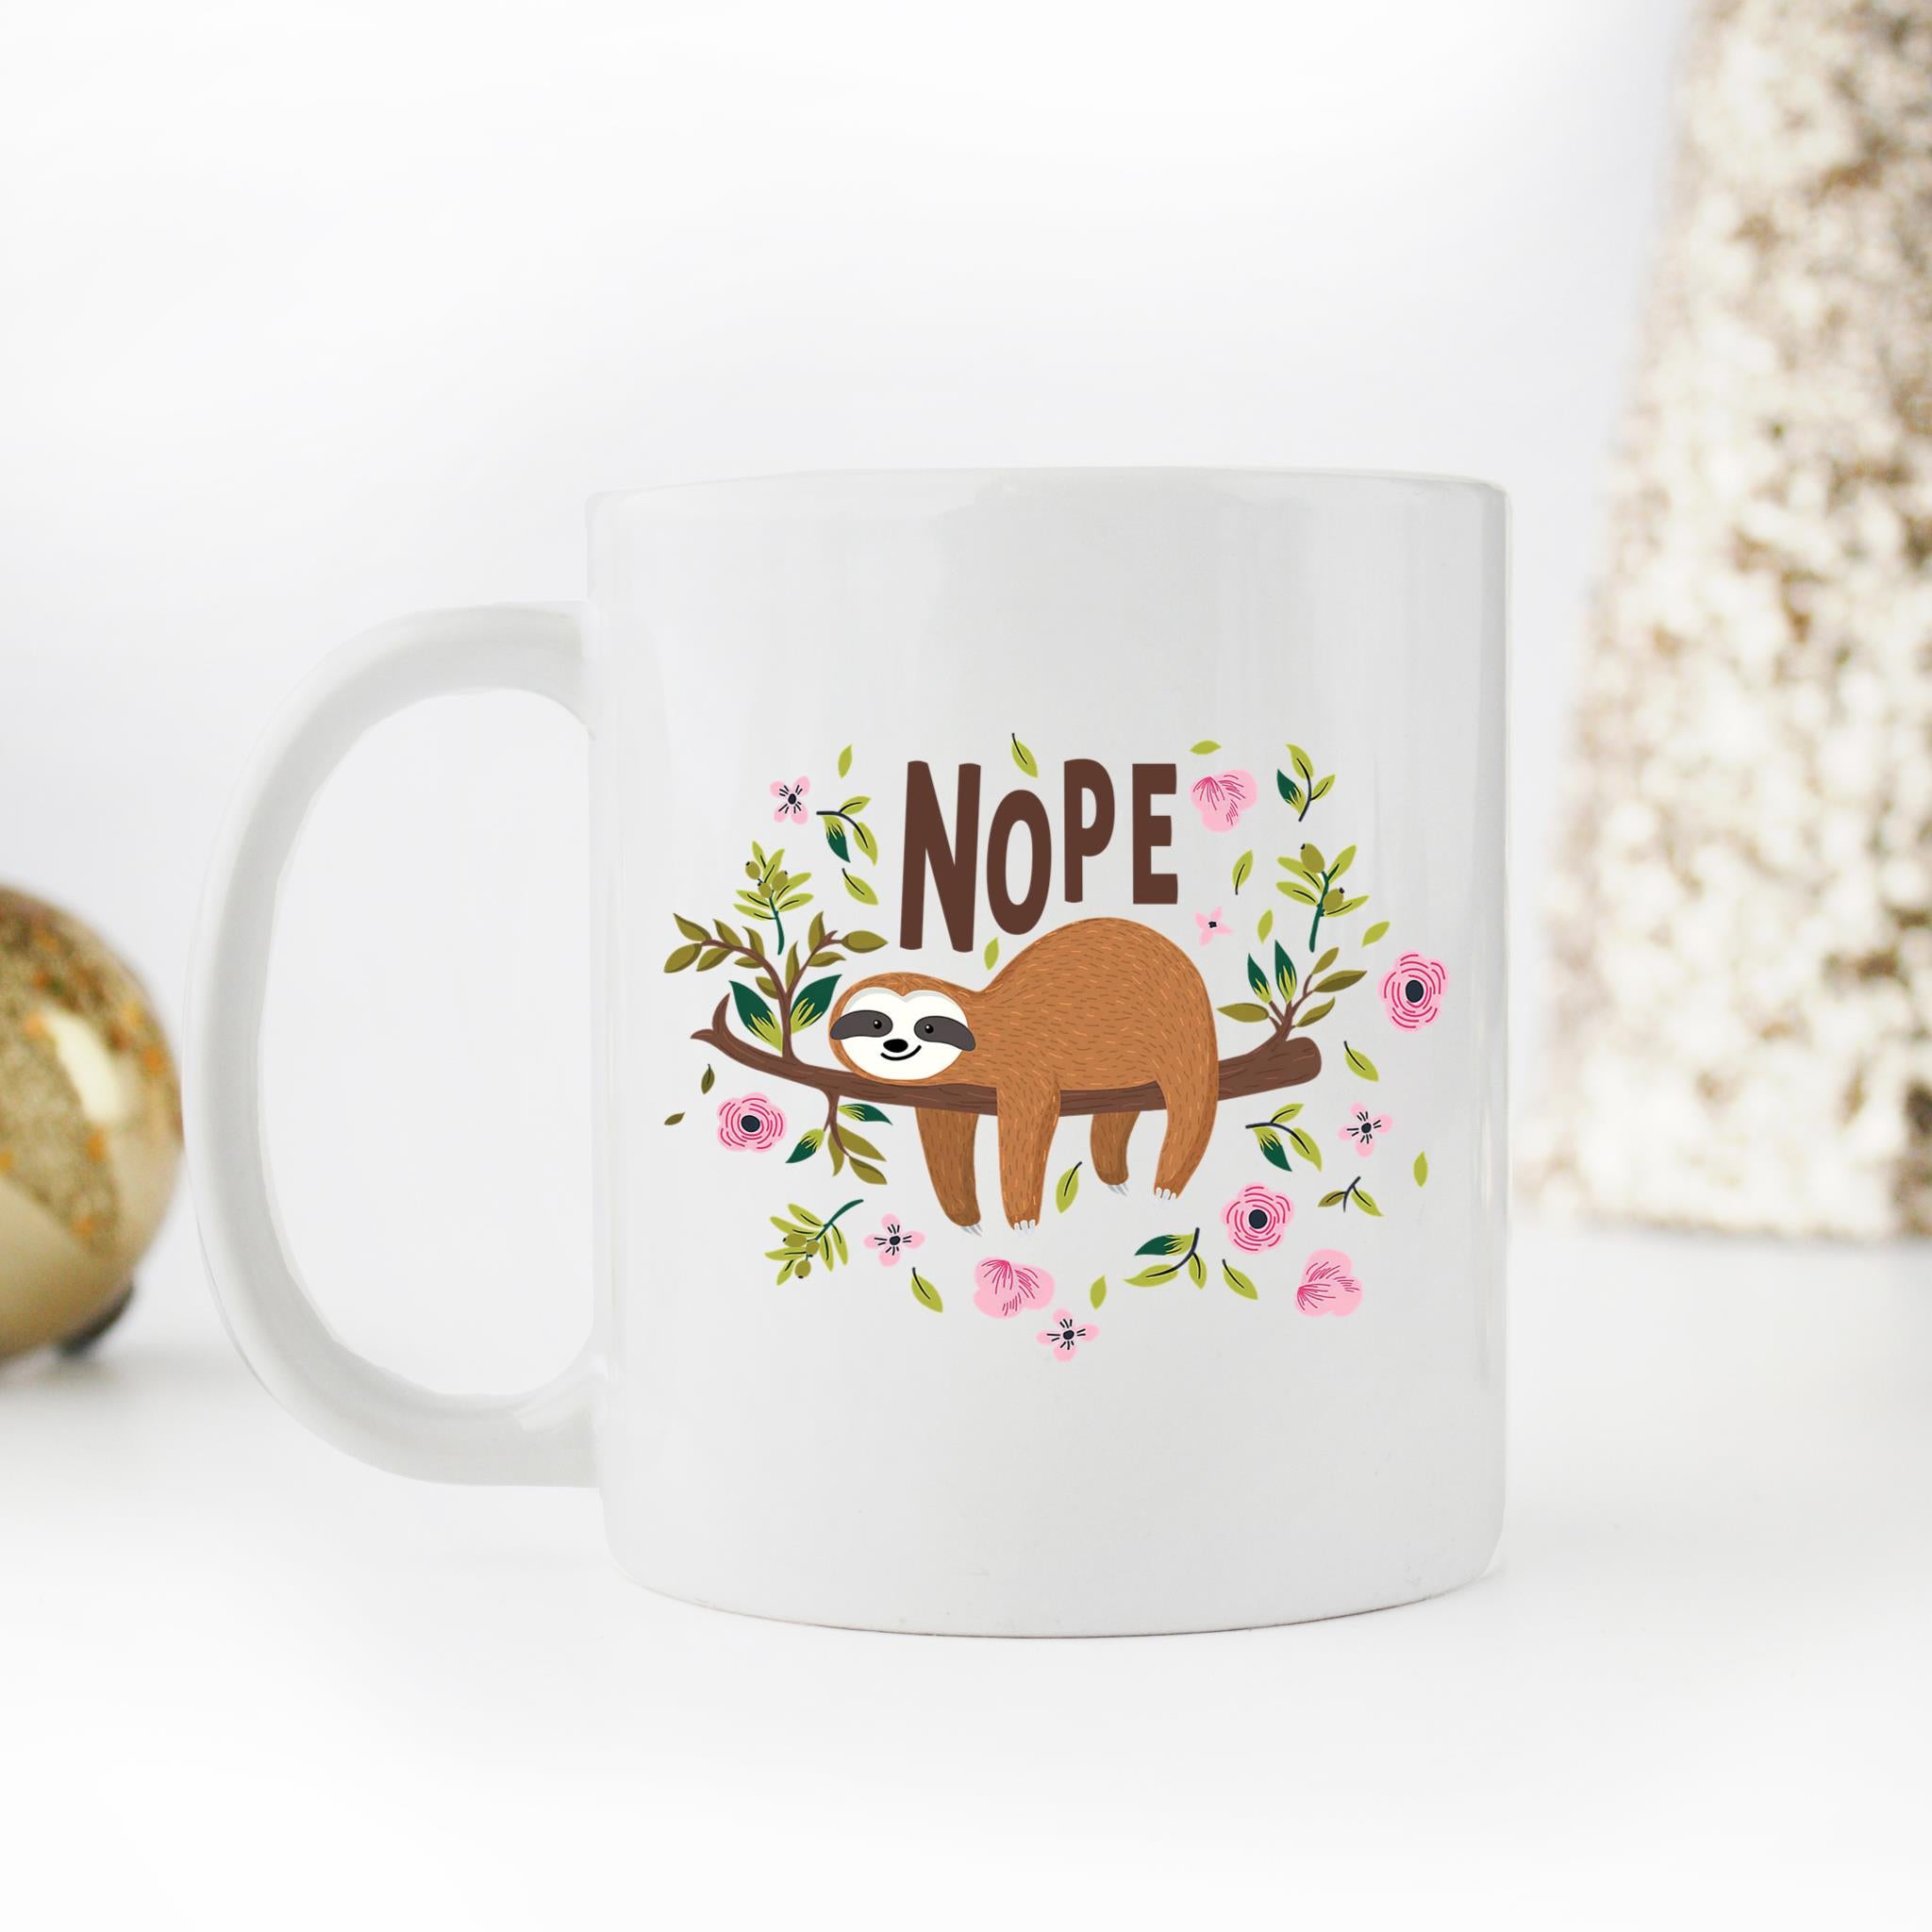 Skitongift Coffee Mug Funny Ceramic Novelty NH08012022-Sloth Nope WhJNKhX